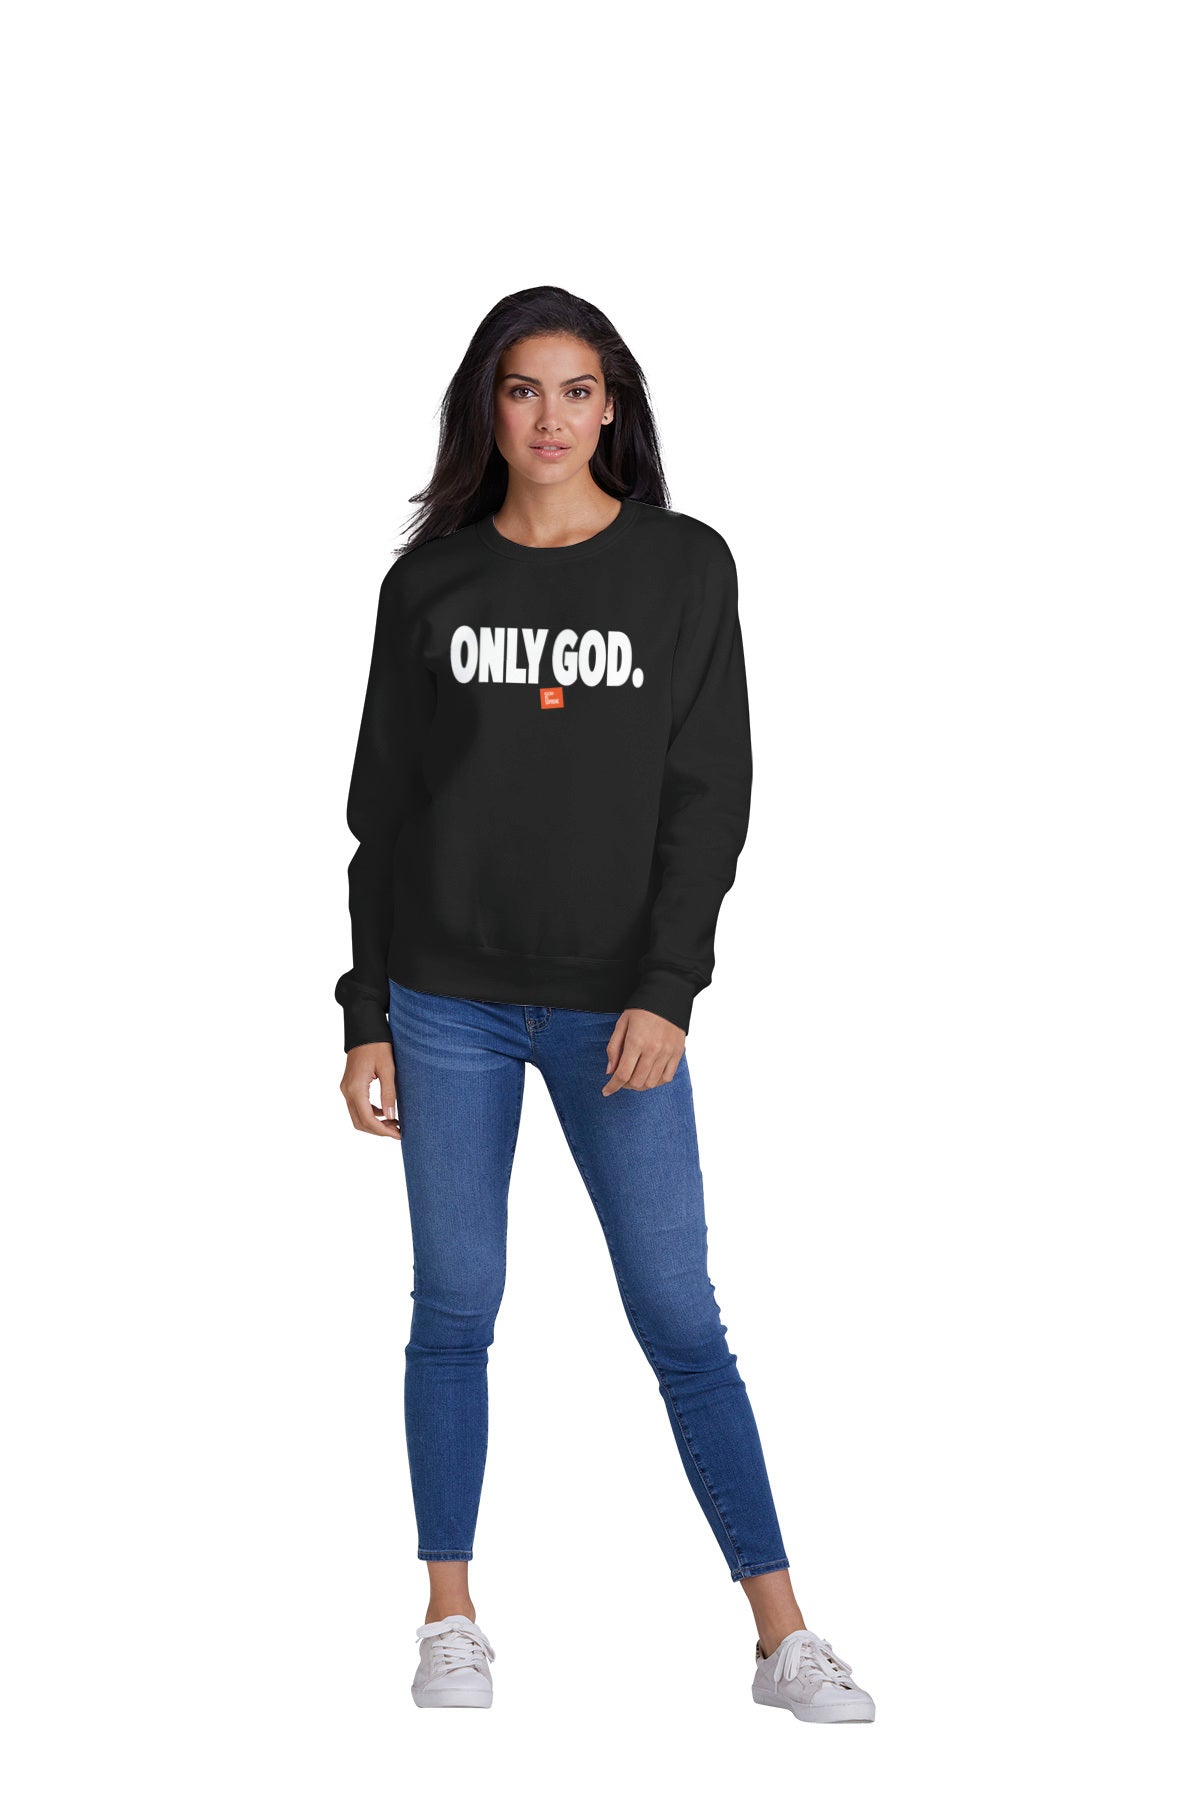 Only God Sports Unisex Black Sweatshirt